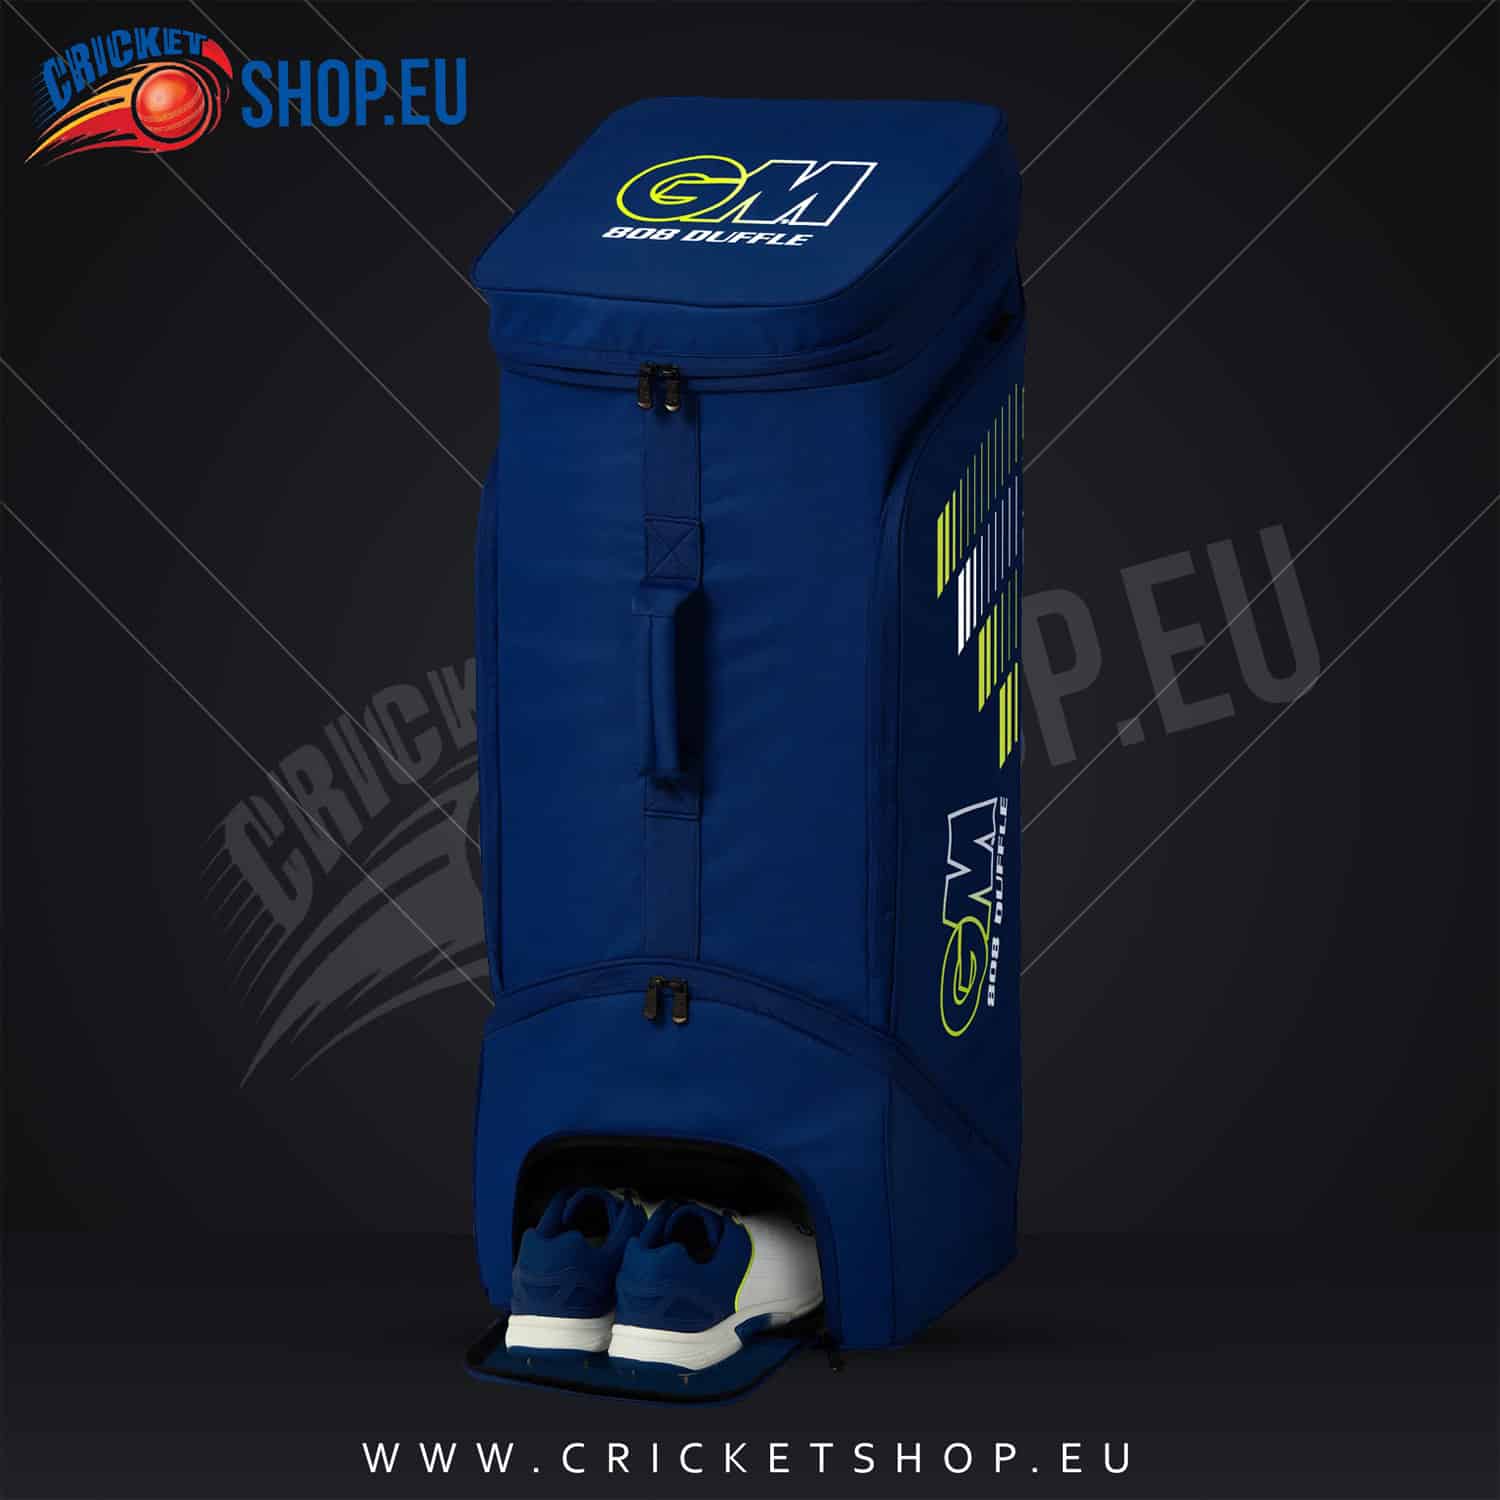 2023 GM 808 Duffle Cricket Kit Bag